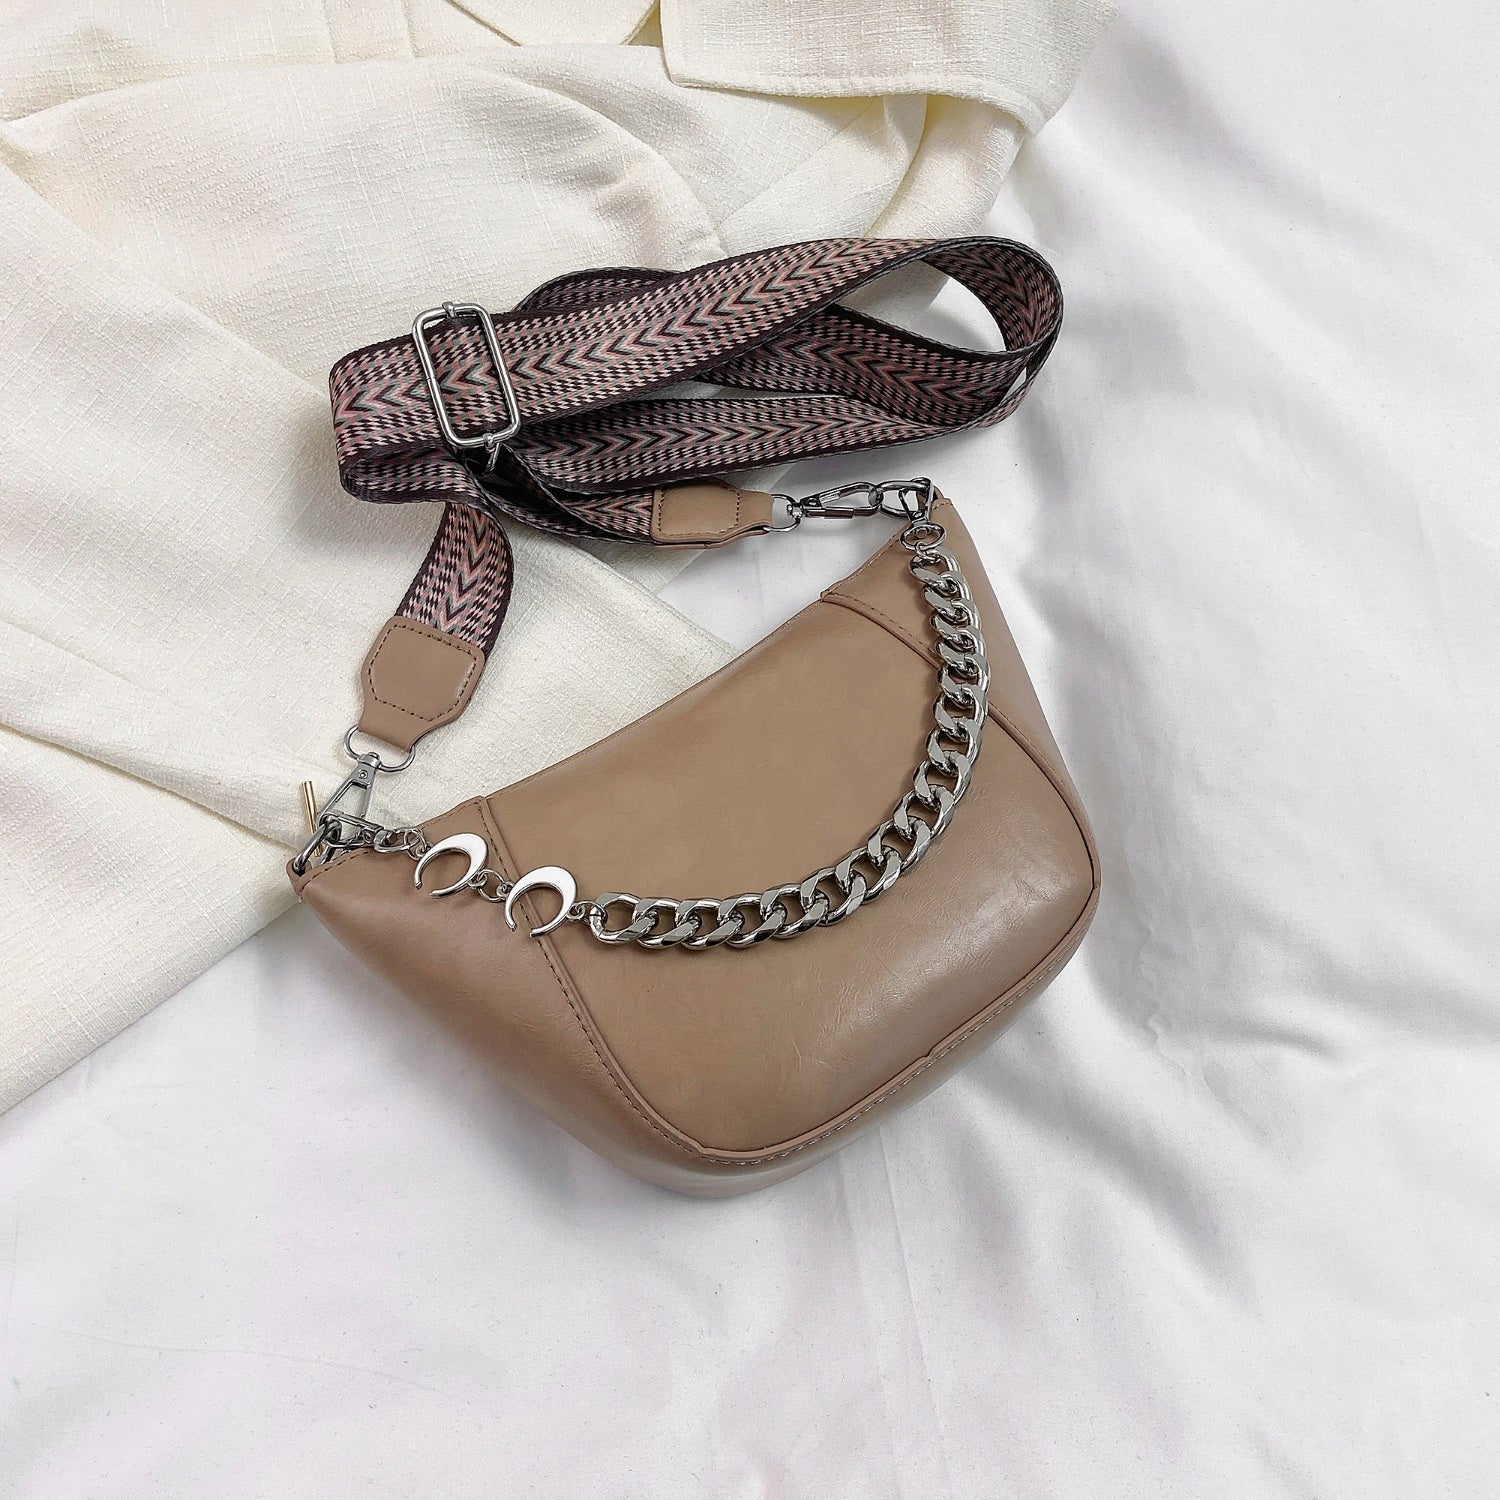 PU Leather Chain Trim Crossbody Bag Khaki One Size 